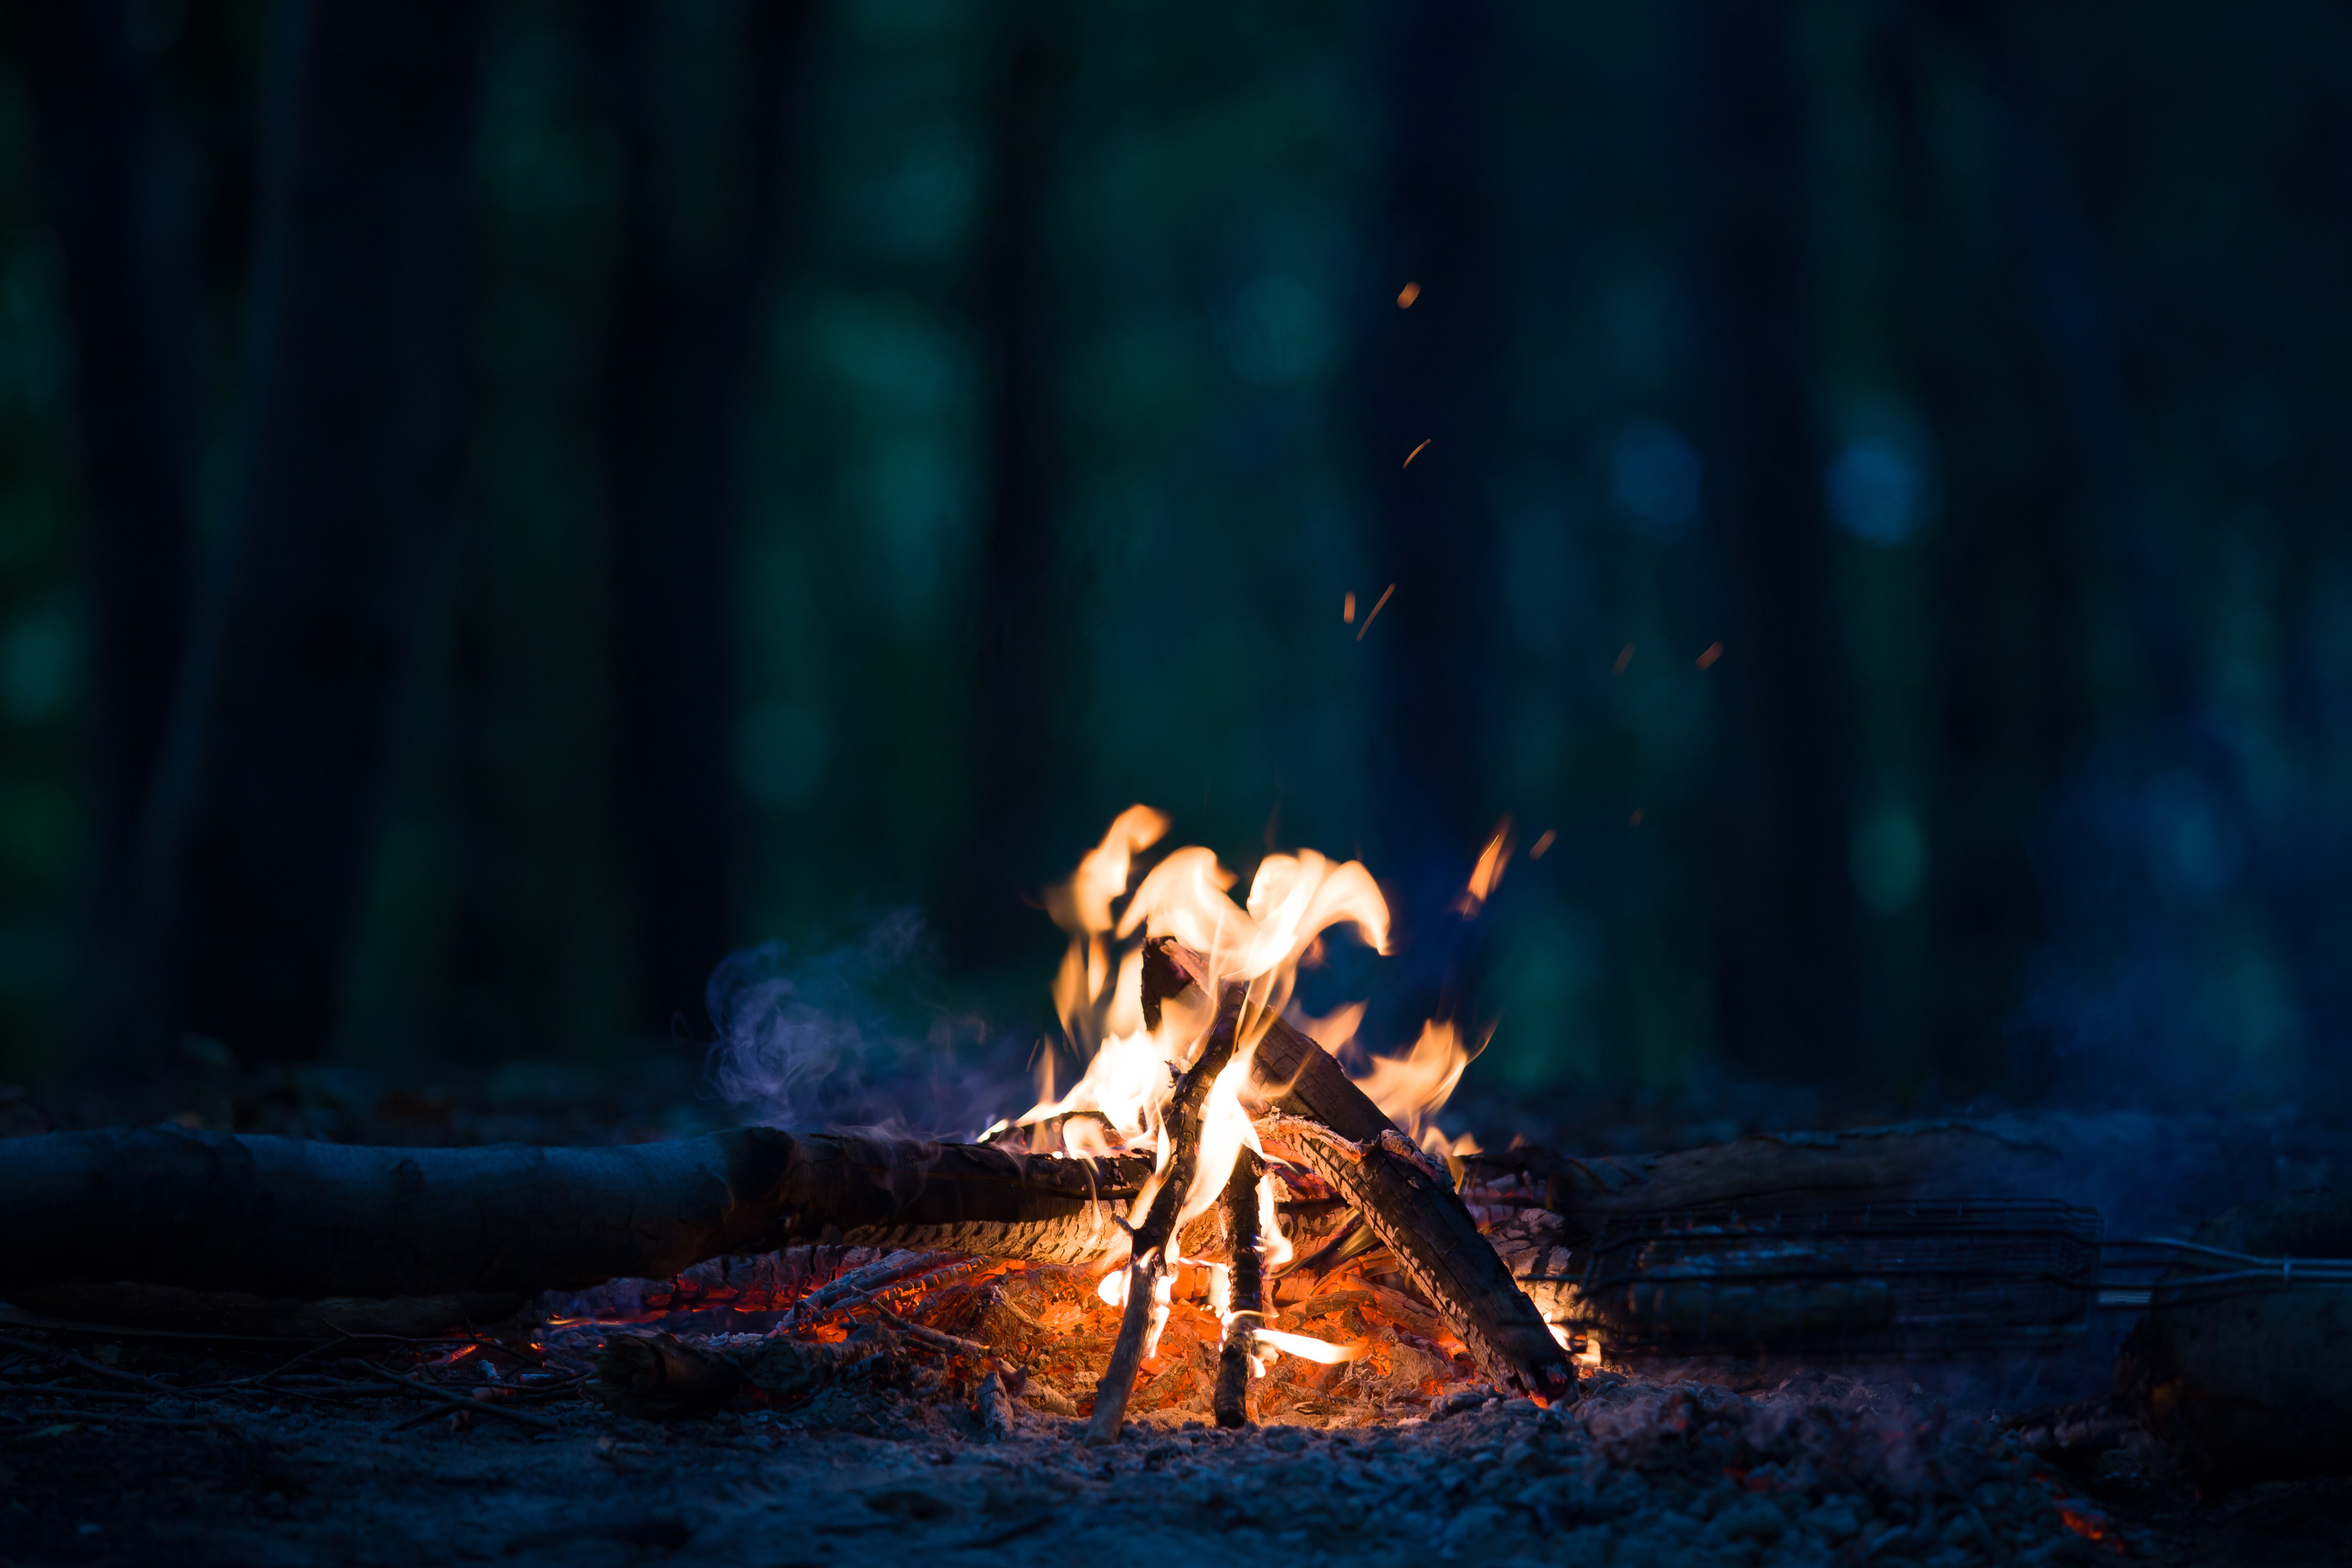 Night campfire at the night.